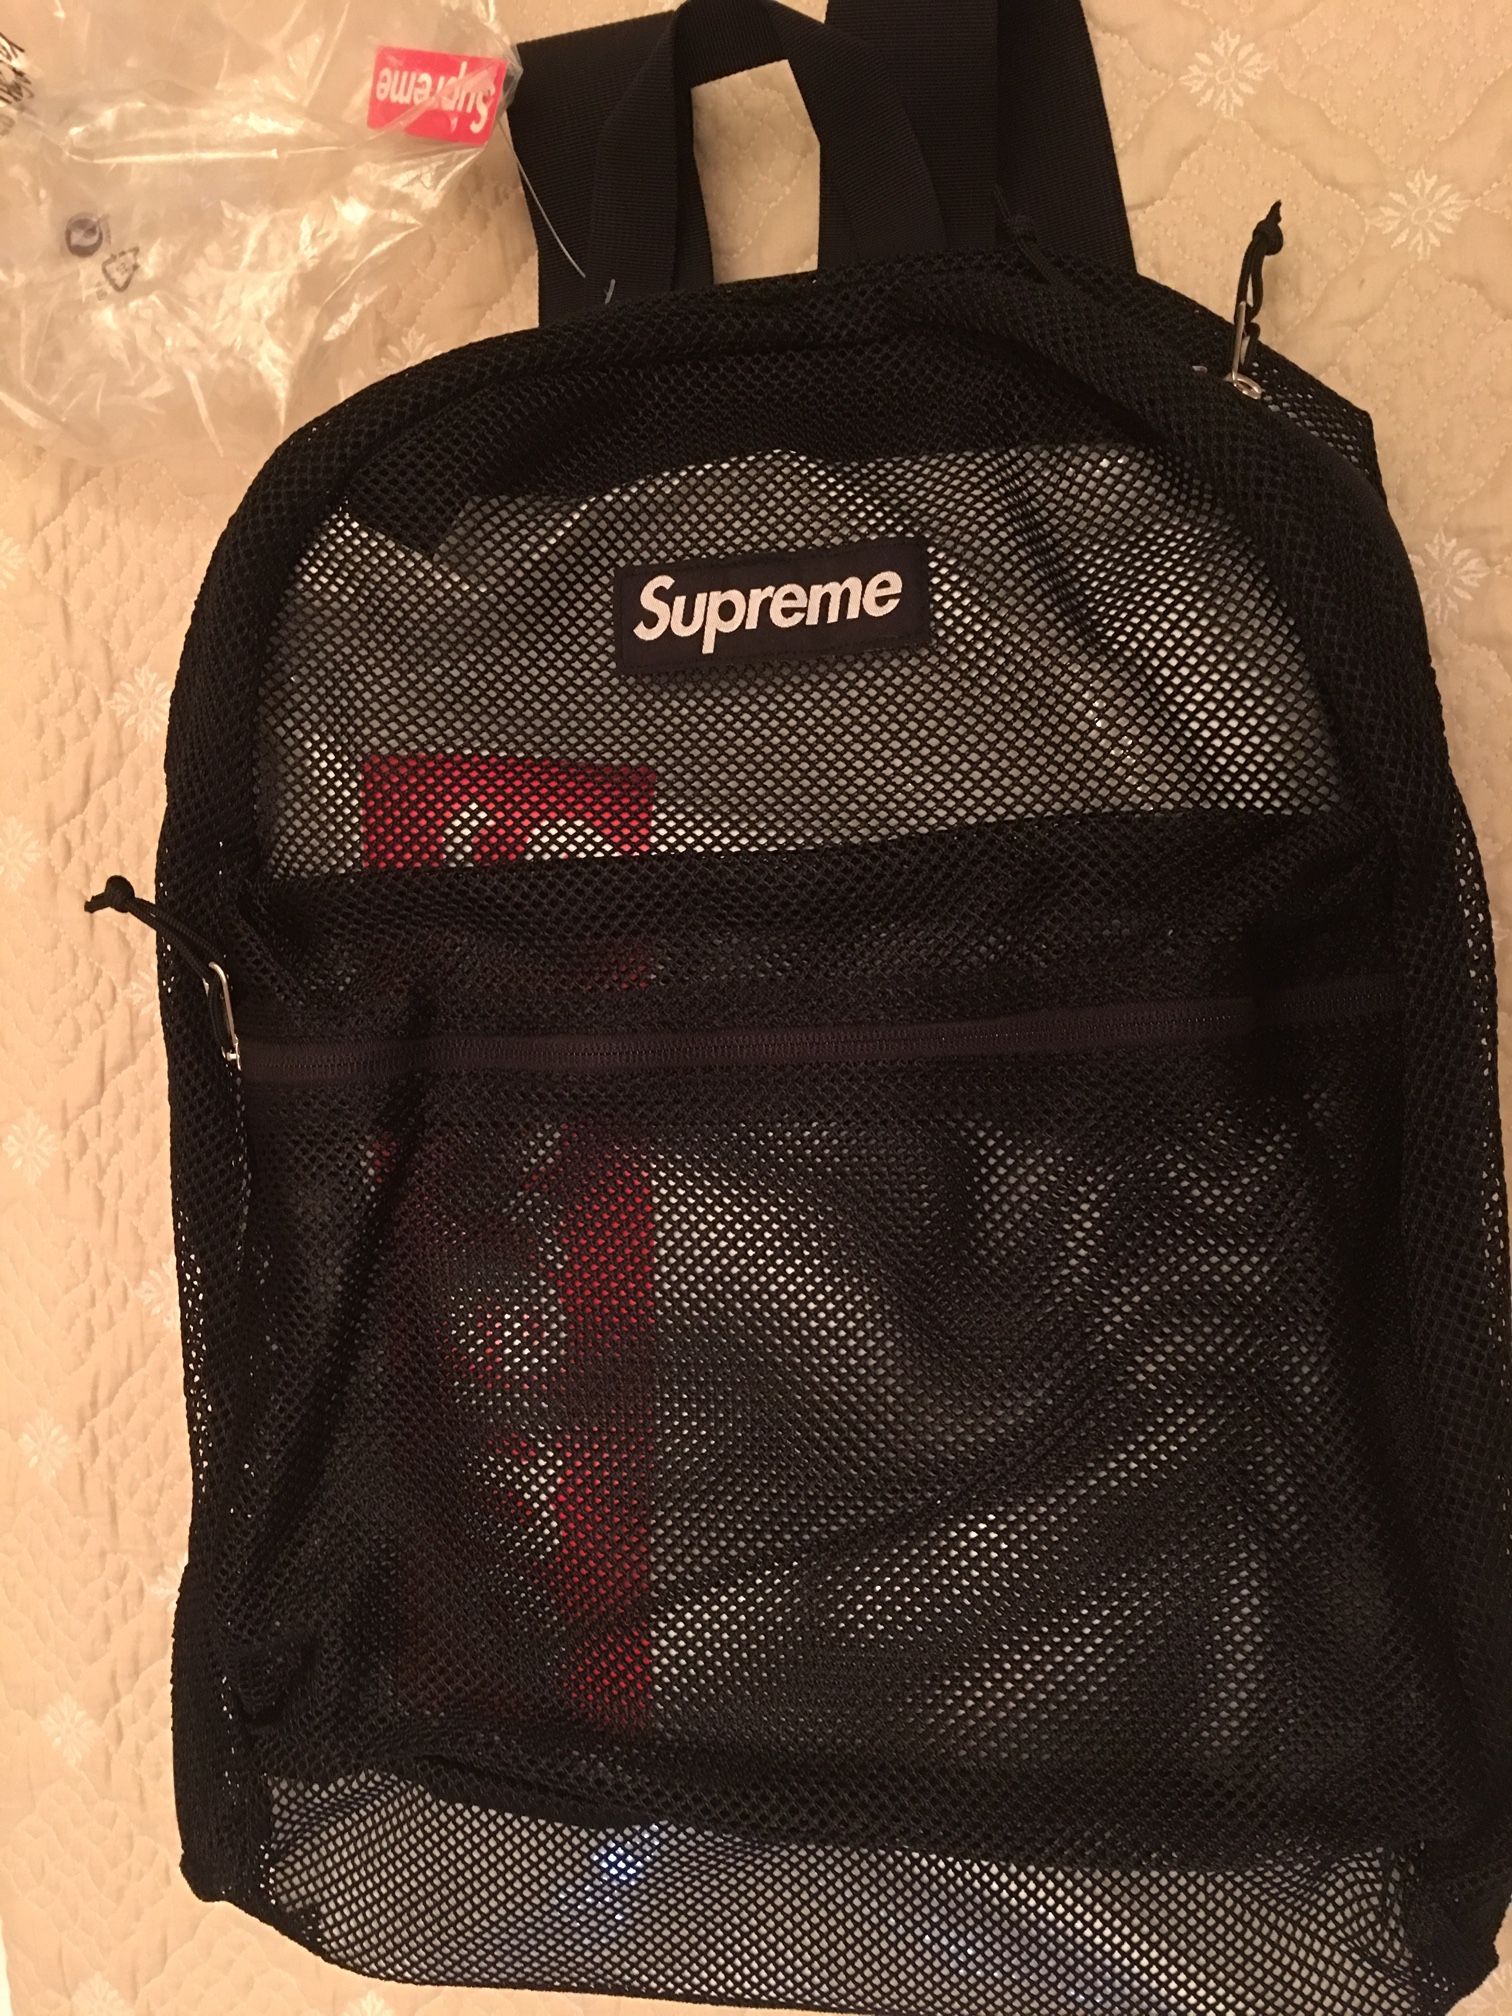 Supreme Mesh Backpack | Grailed